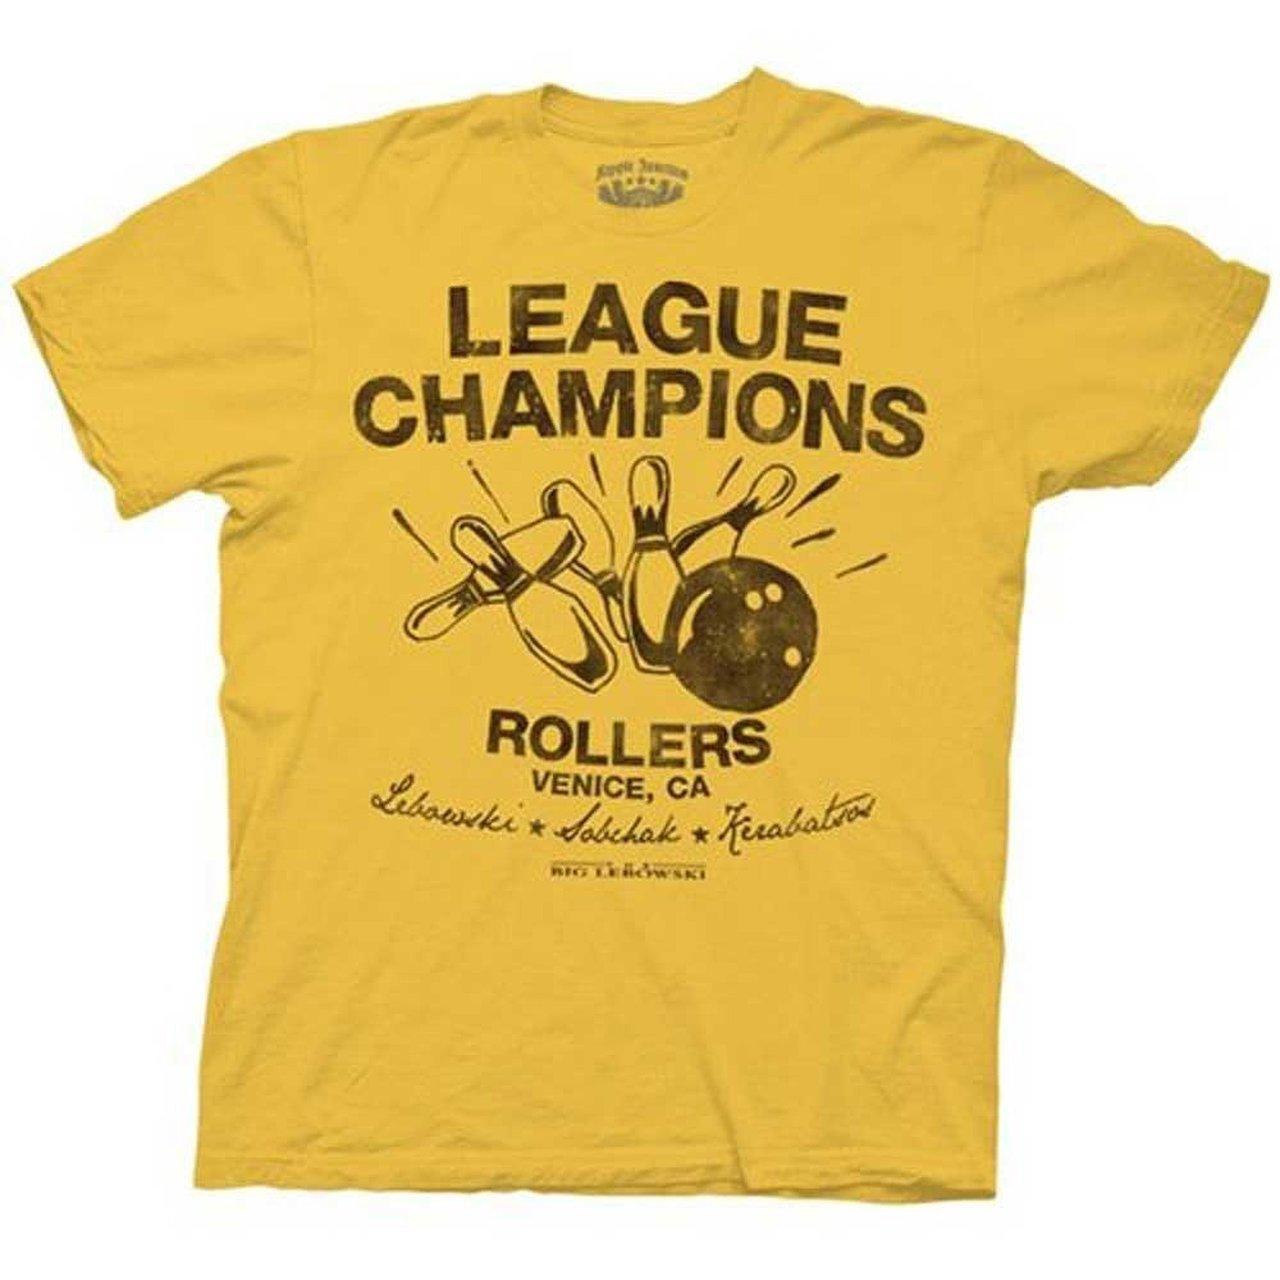 The Big Lebowski Bowling League Champions Rollers Gold Adult T-shirt - The Big Lebowski